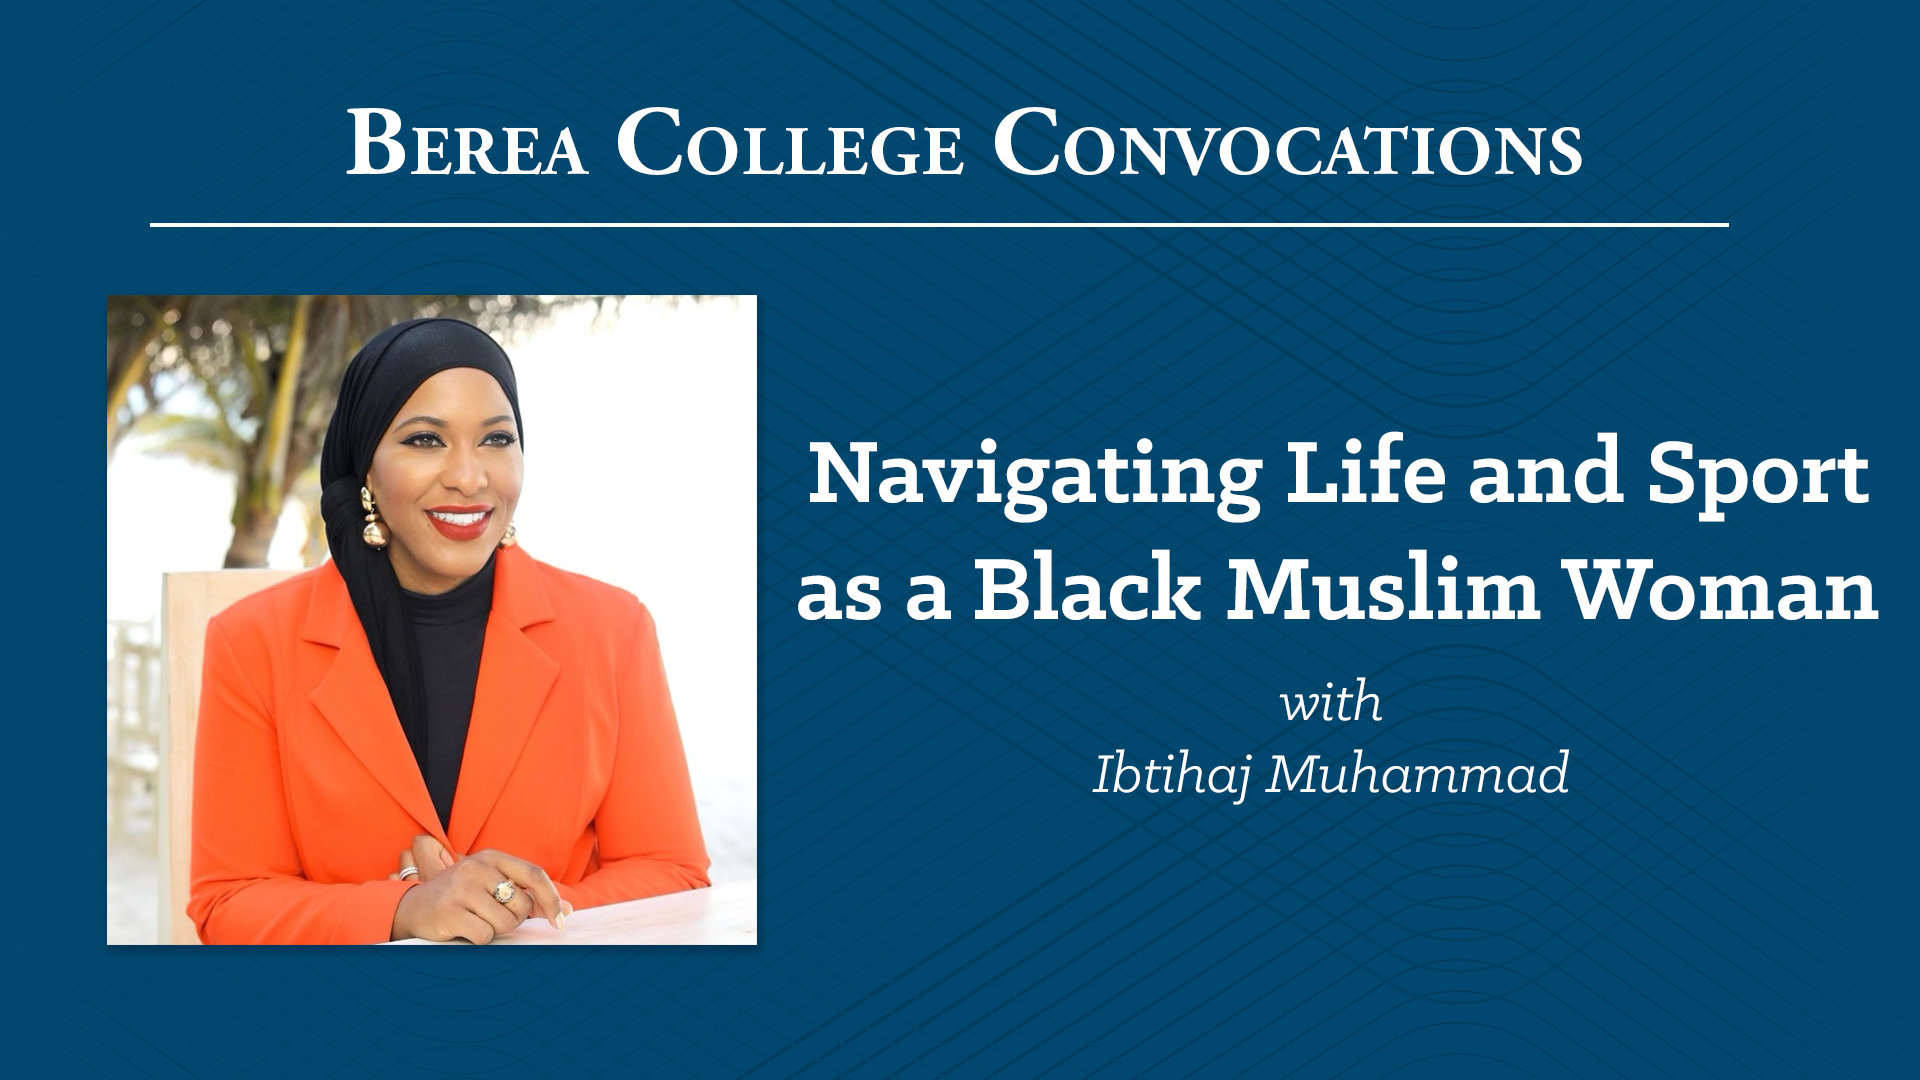 Ibtihaj Muhammad: Navigating Life and Sport as a Black Muslim Woman